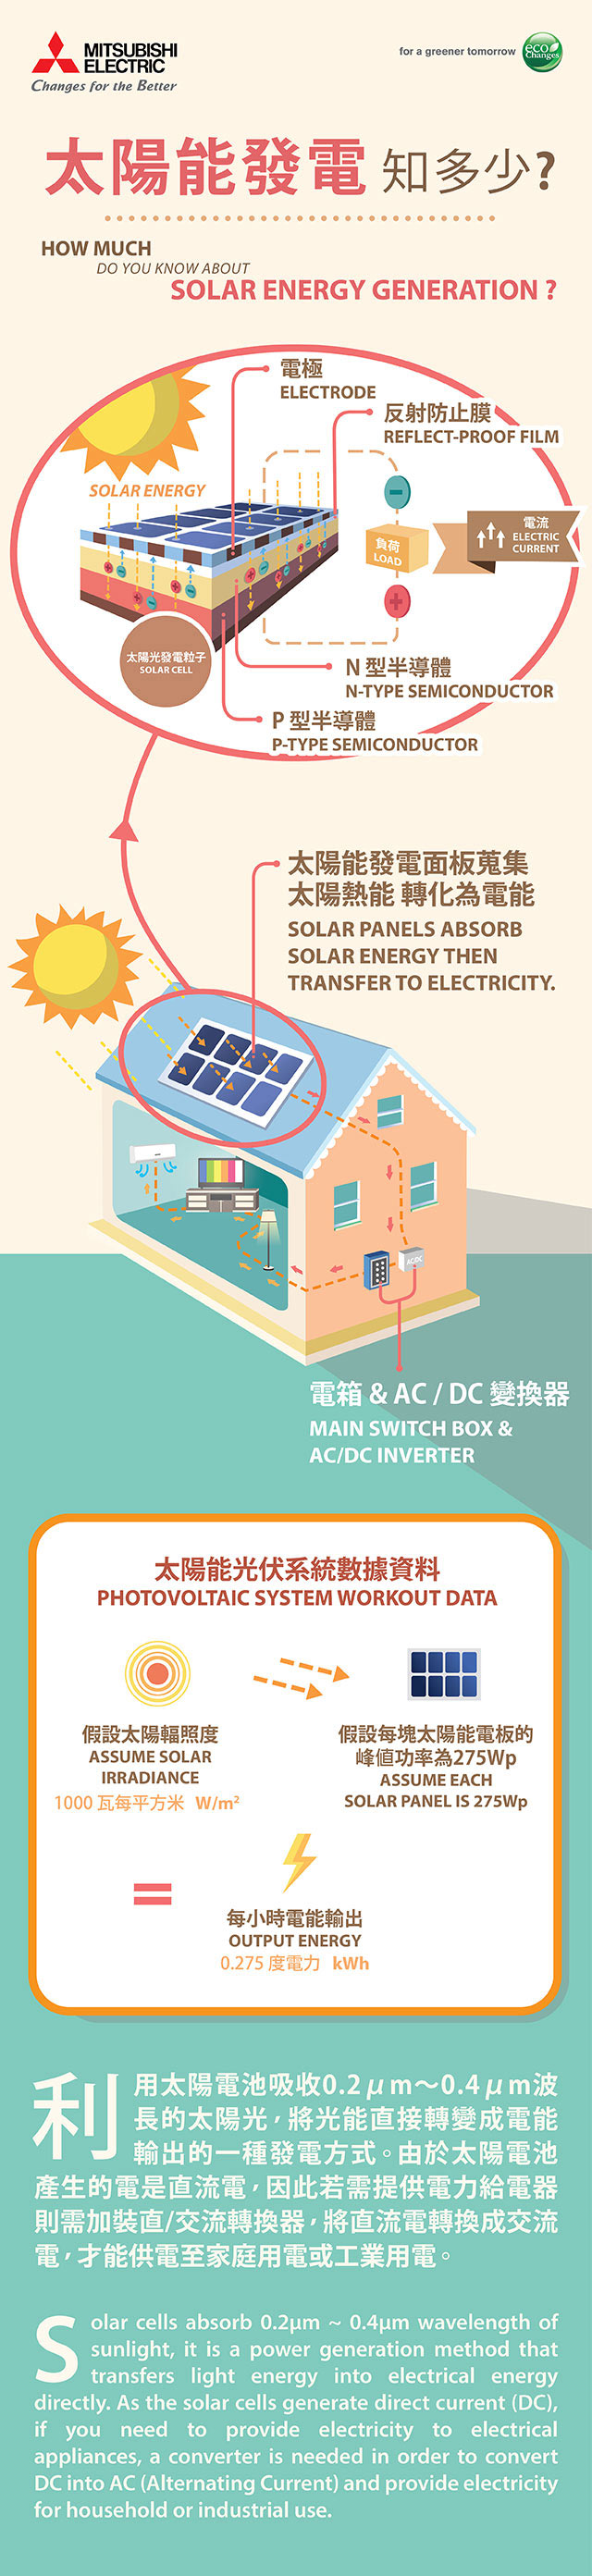 ME-HK Solar Energy